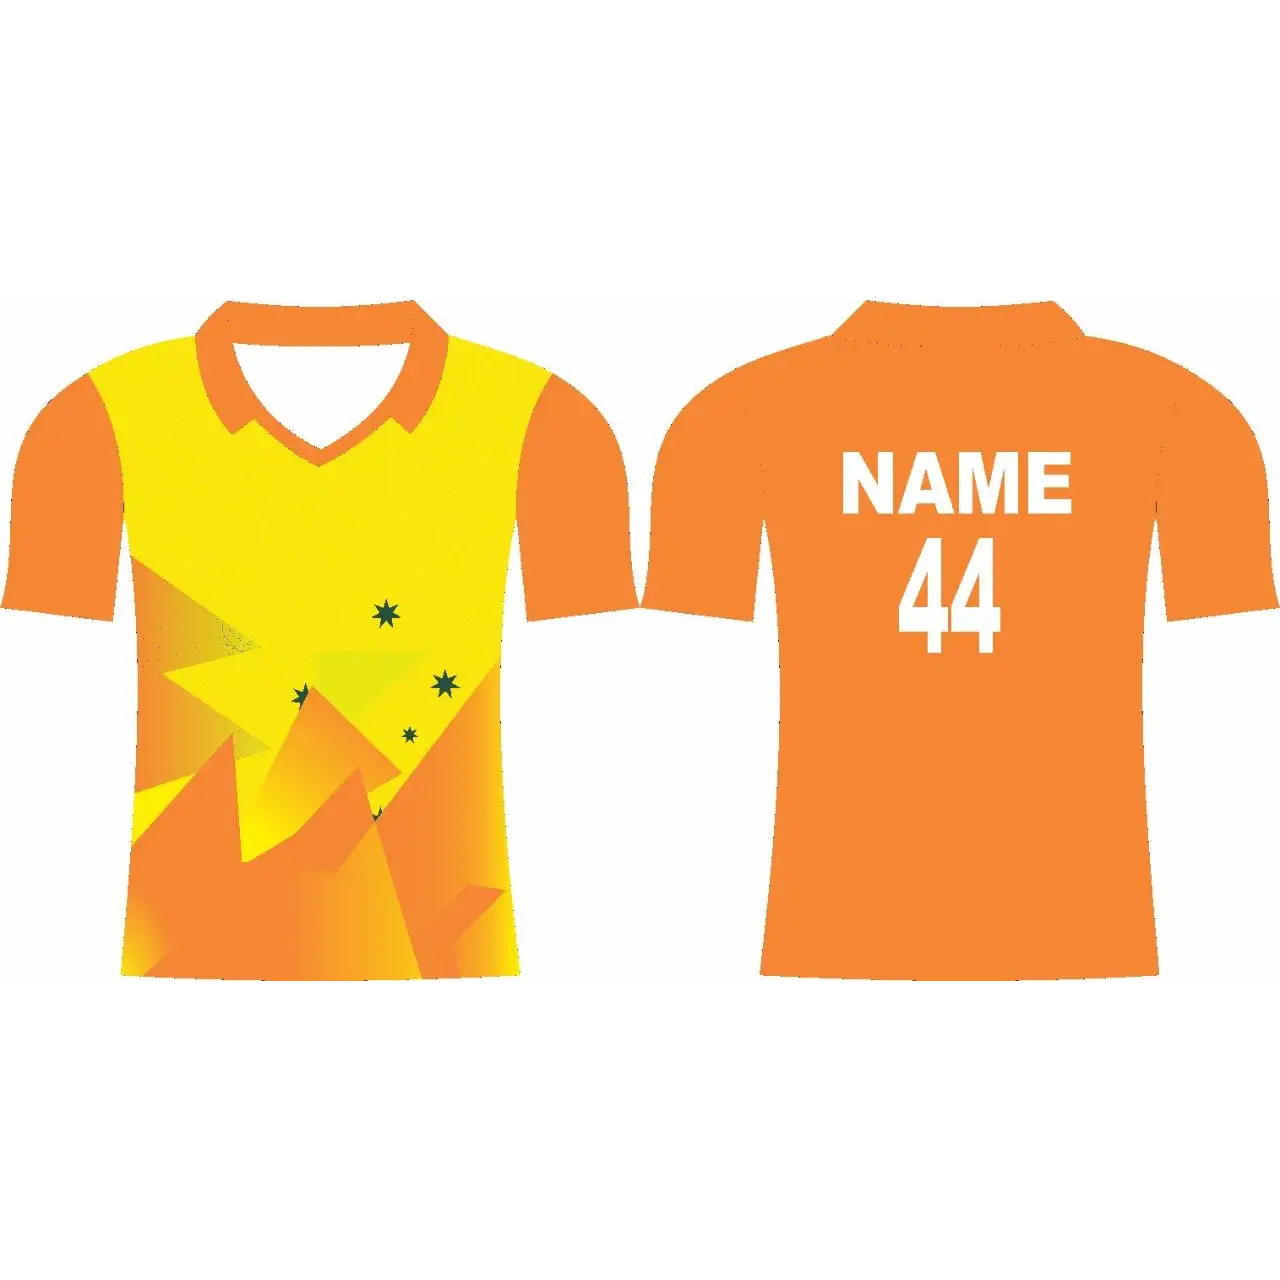 Cricket Jersey Shirt Kit Orange and Yellow Full Sublimation - S-XL - Custom Cricket Jerseys